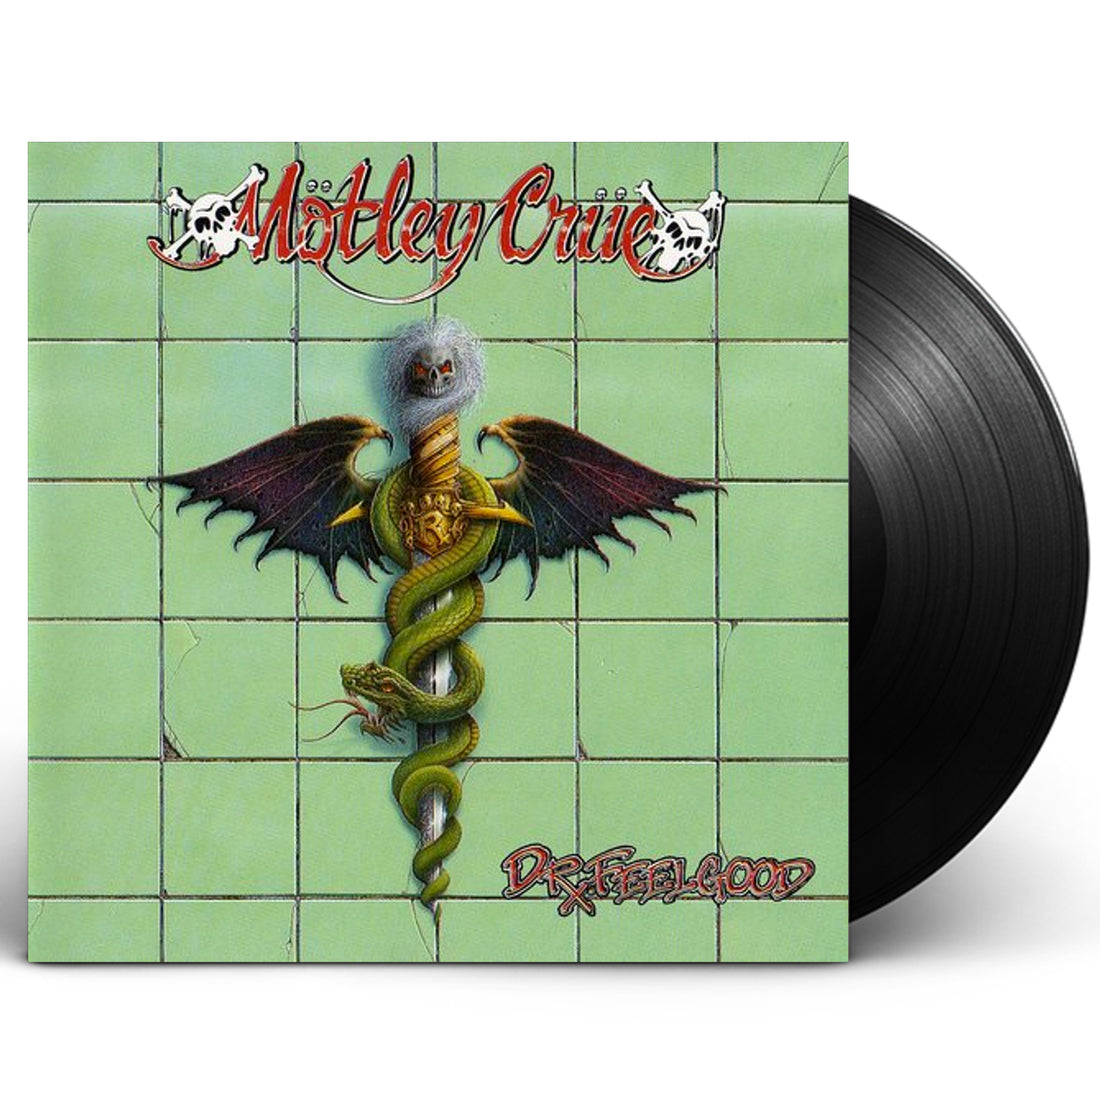 Motley Crue "Dr. Feelgood" LP Vinyl